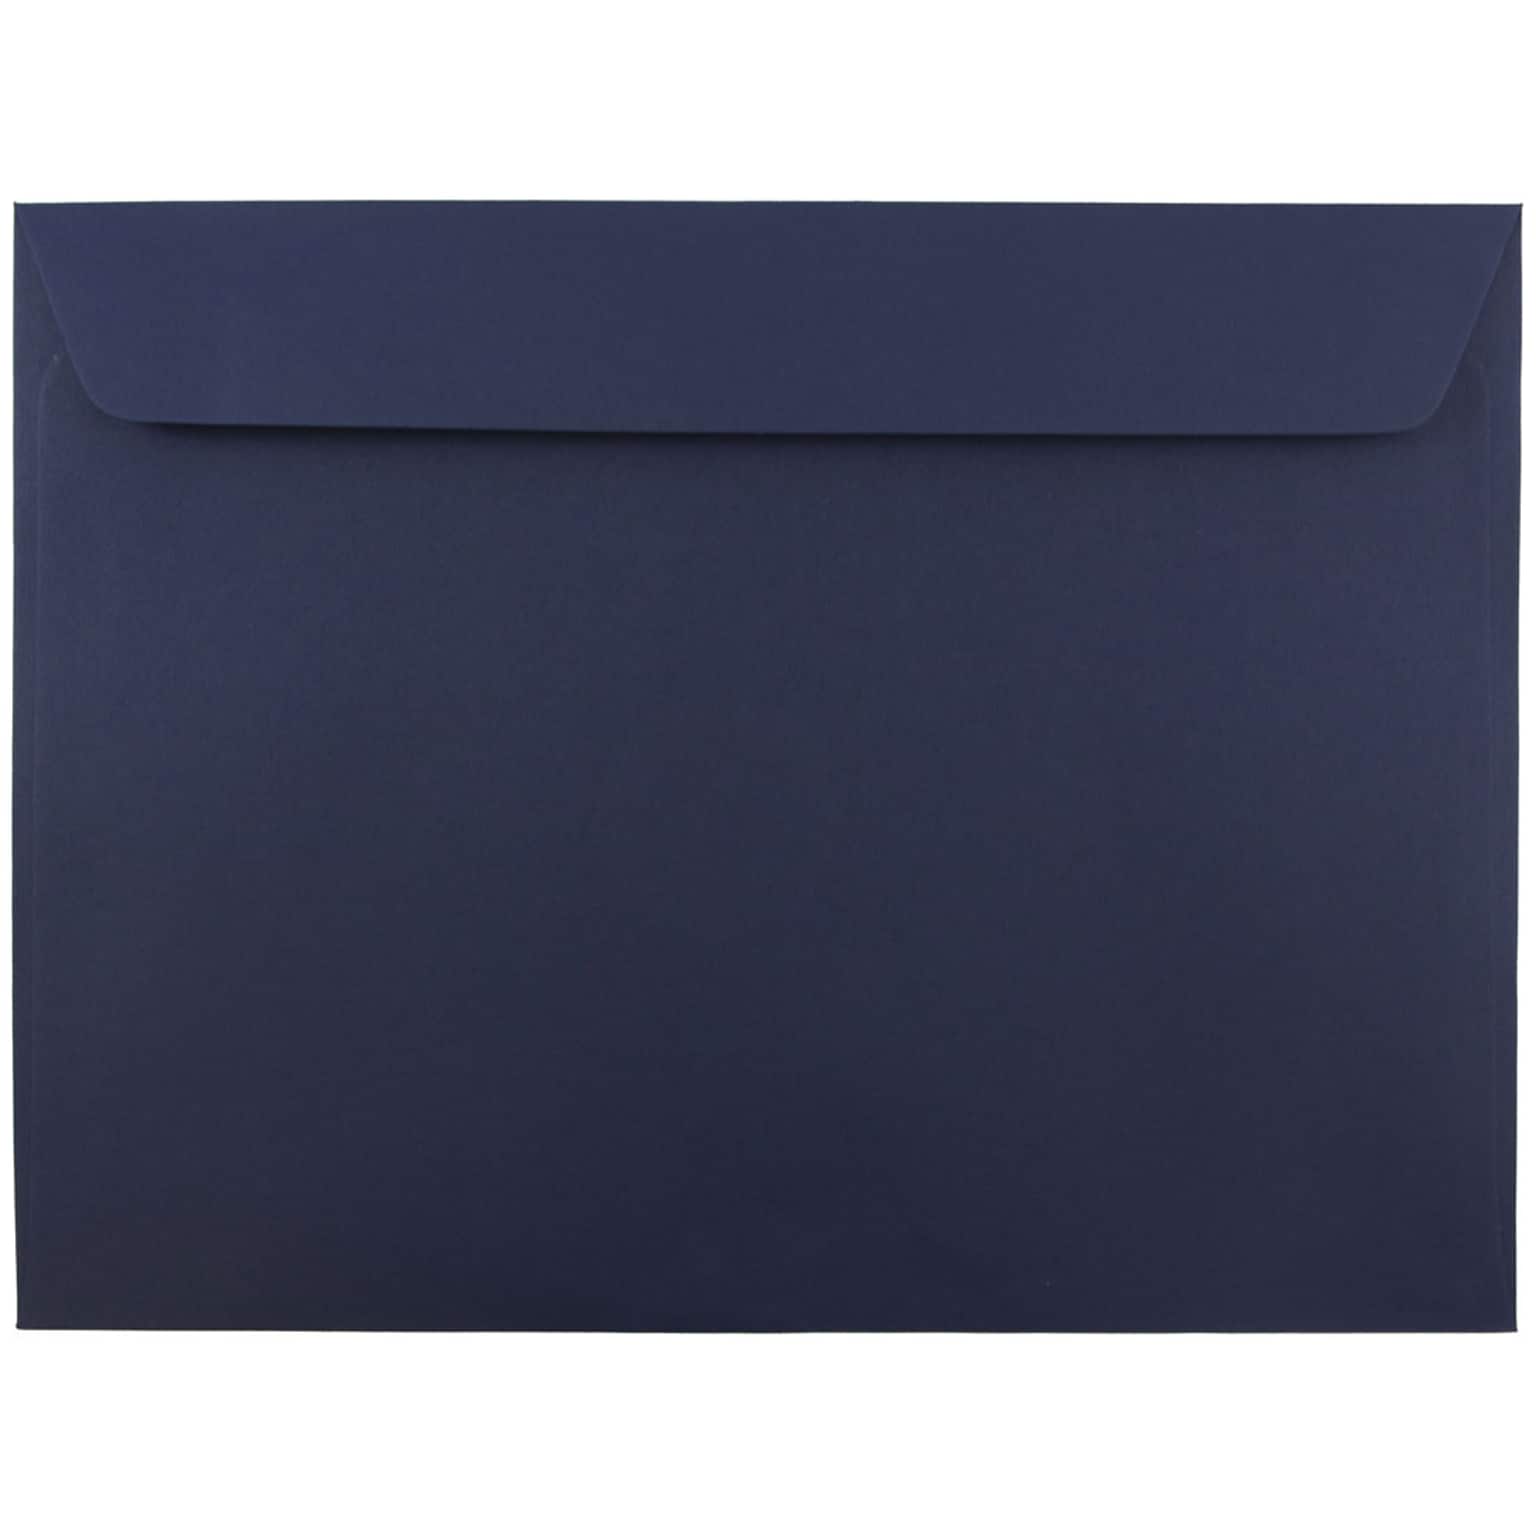 JAM Paper 9 x 12 Booklet Envelopes, Navy Blue, 50/Pack (263916011i)